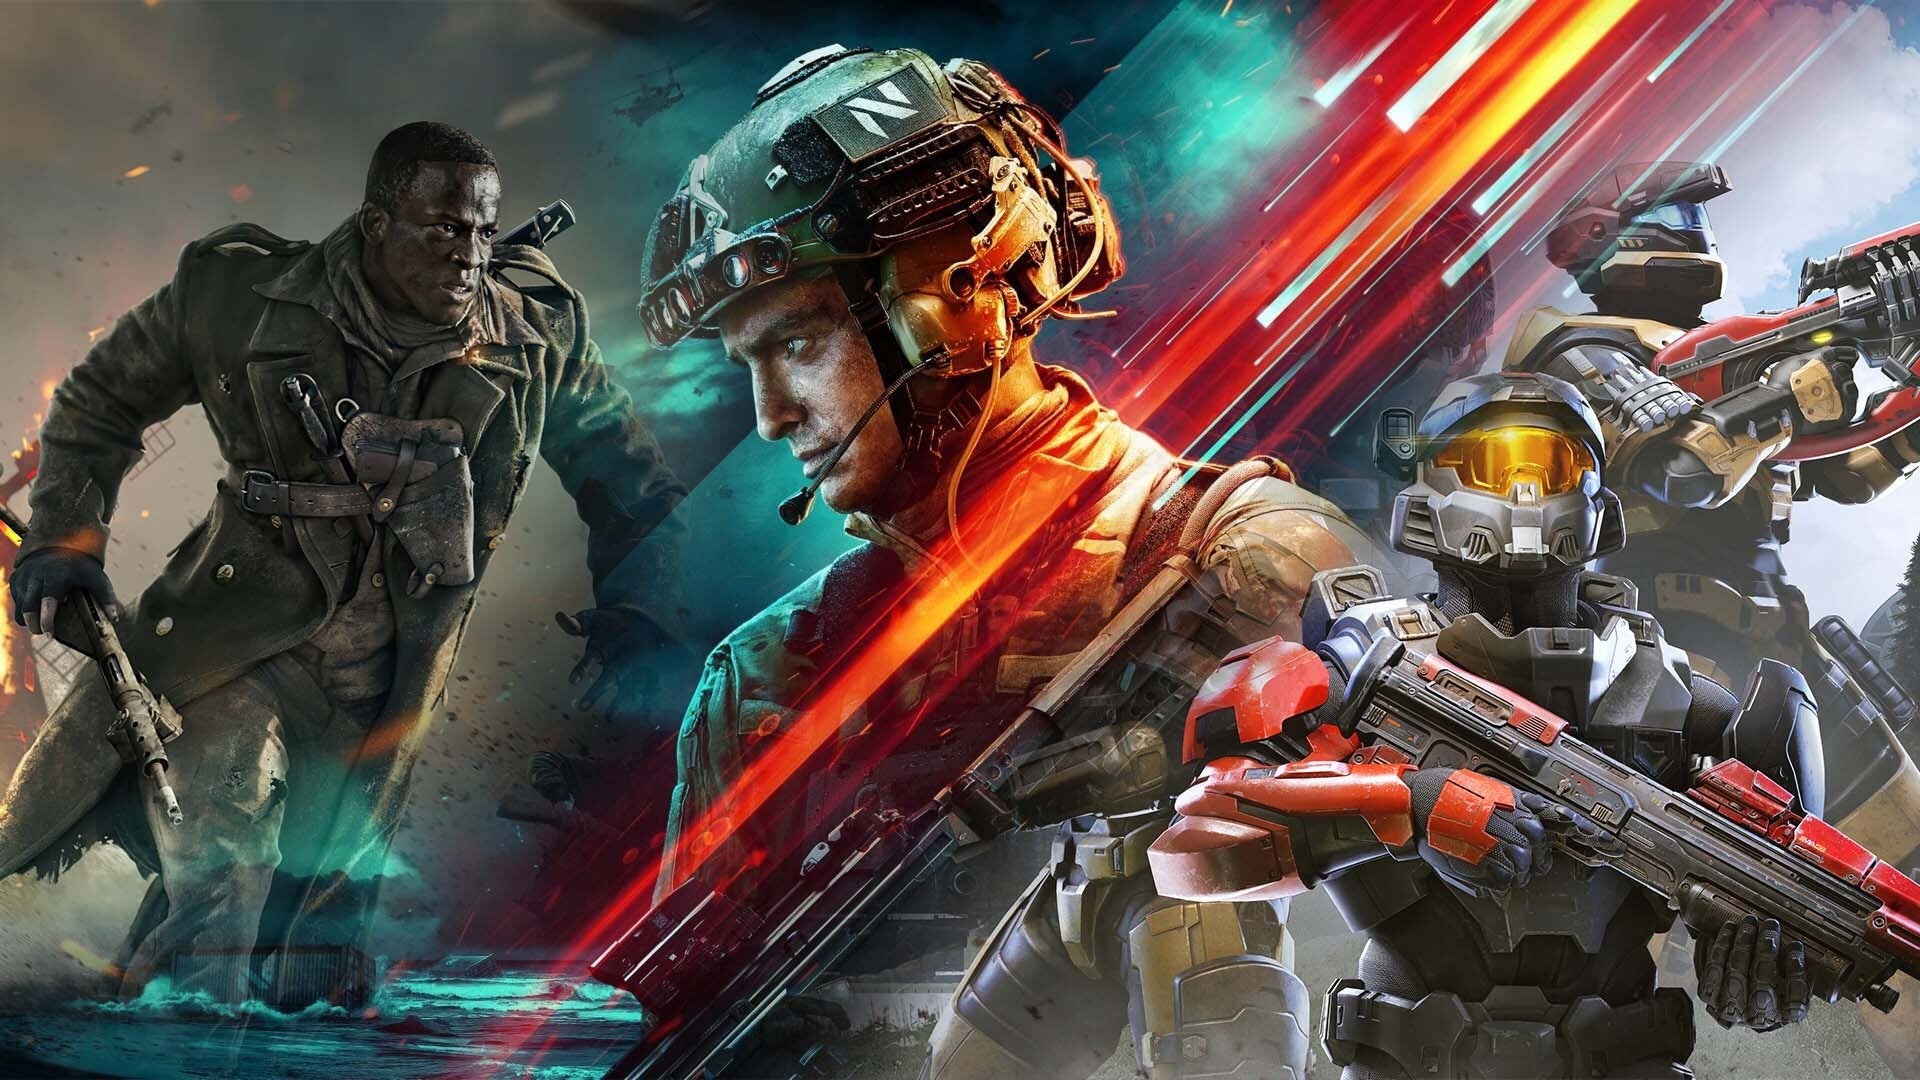 Image for 2021 FPS Showdown: Battlefield 2042 vs Call of Duty: Vanguard vs Halo Infinite